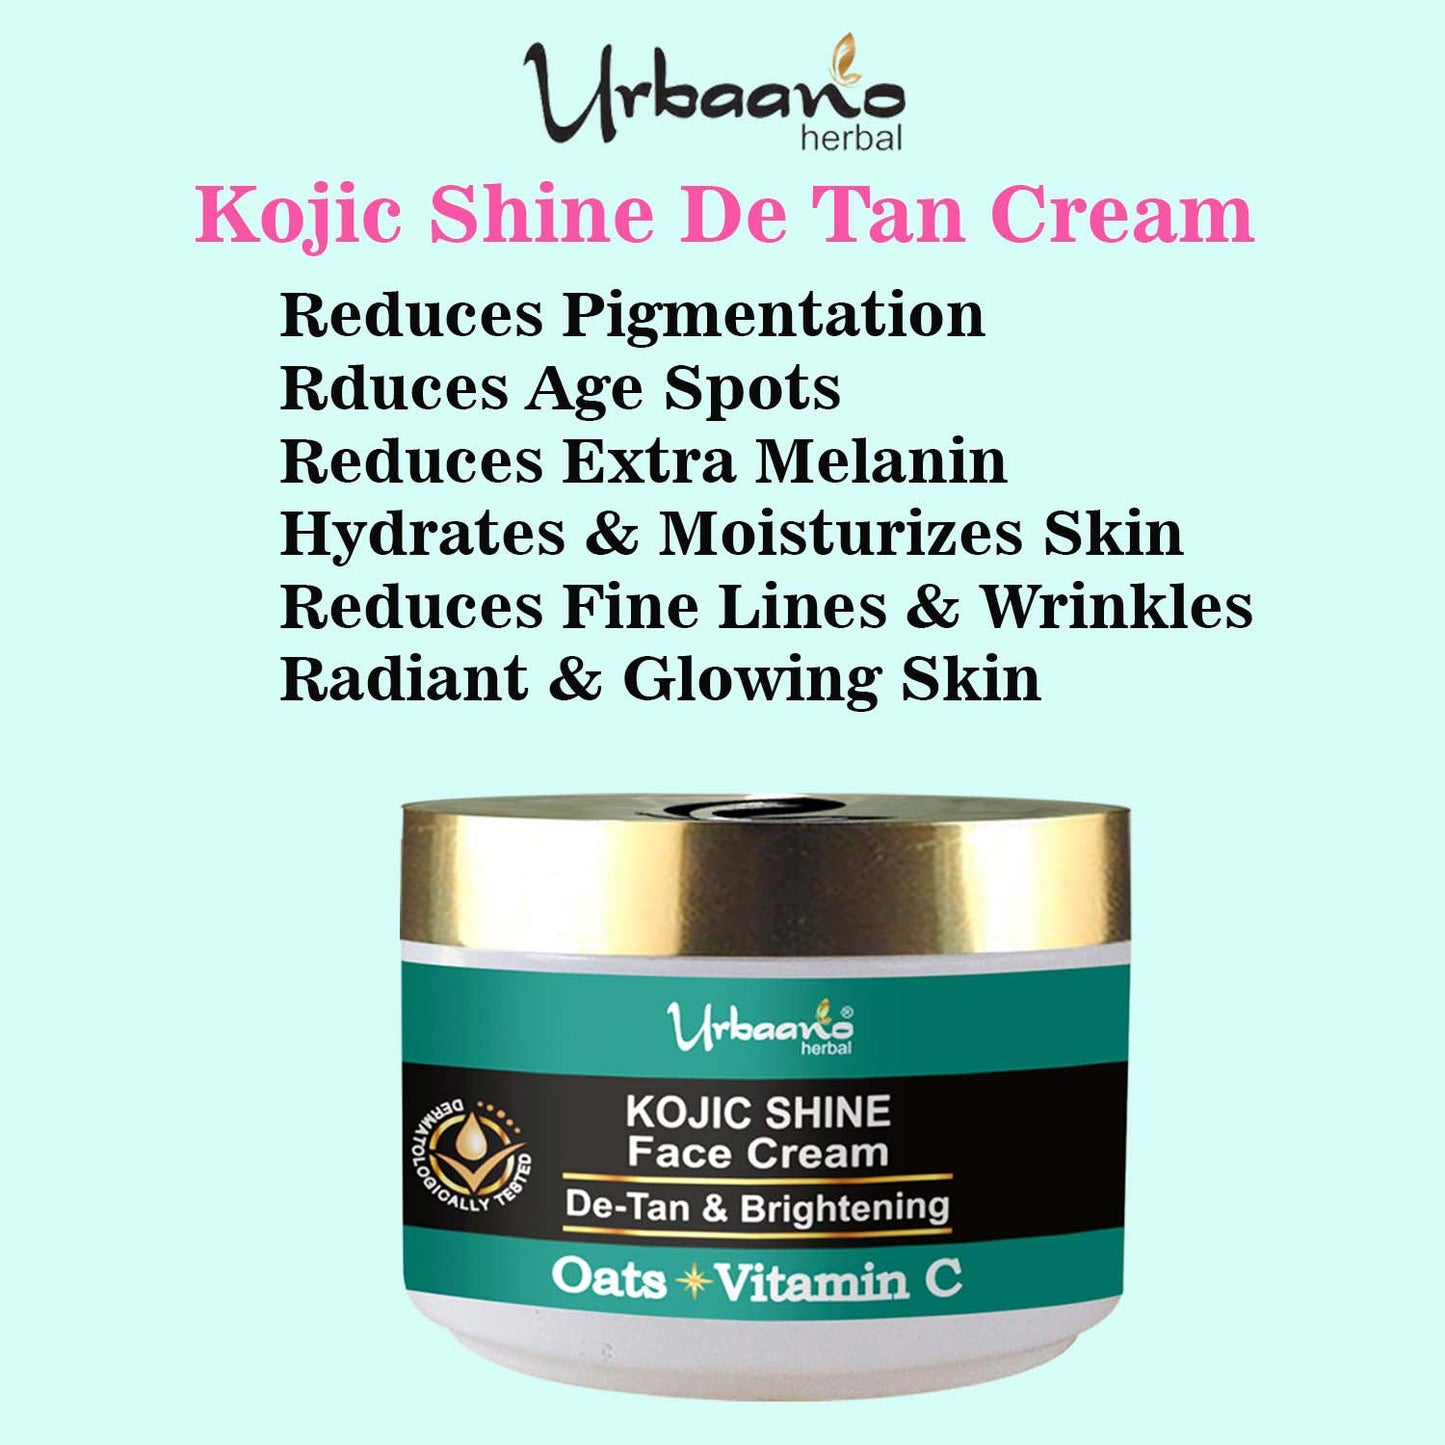 urbaano herbal vitamn c de tan facial kit kojic shine face cream for bright illuminating skin